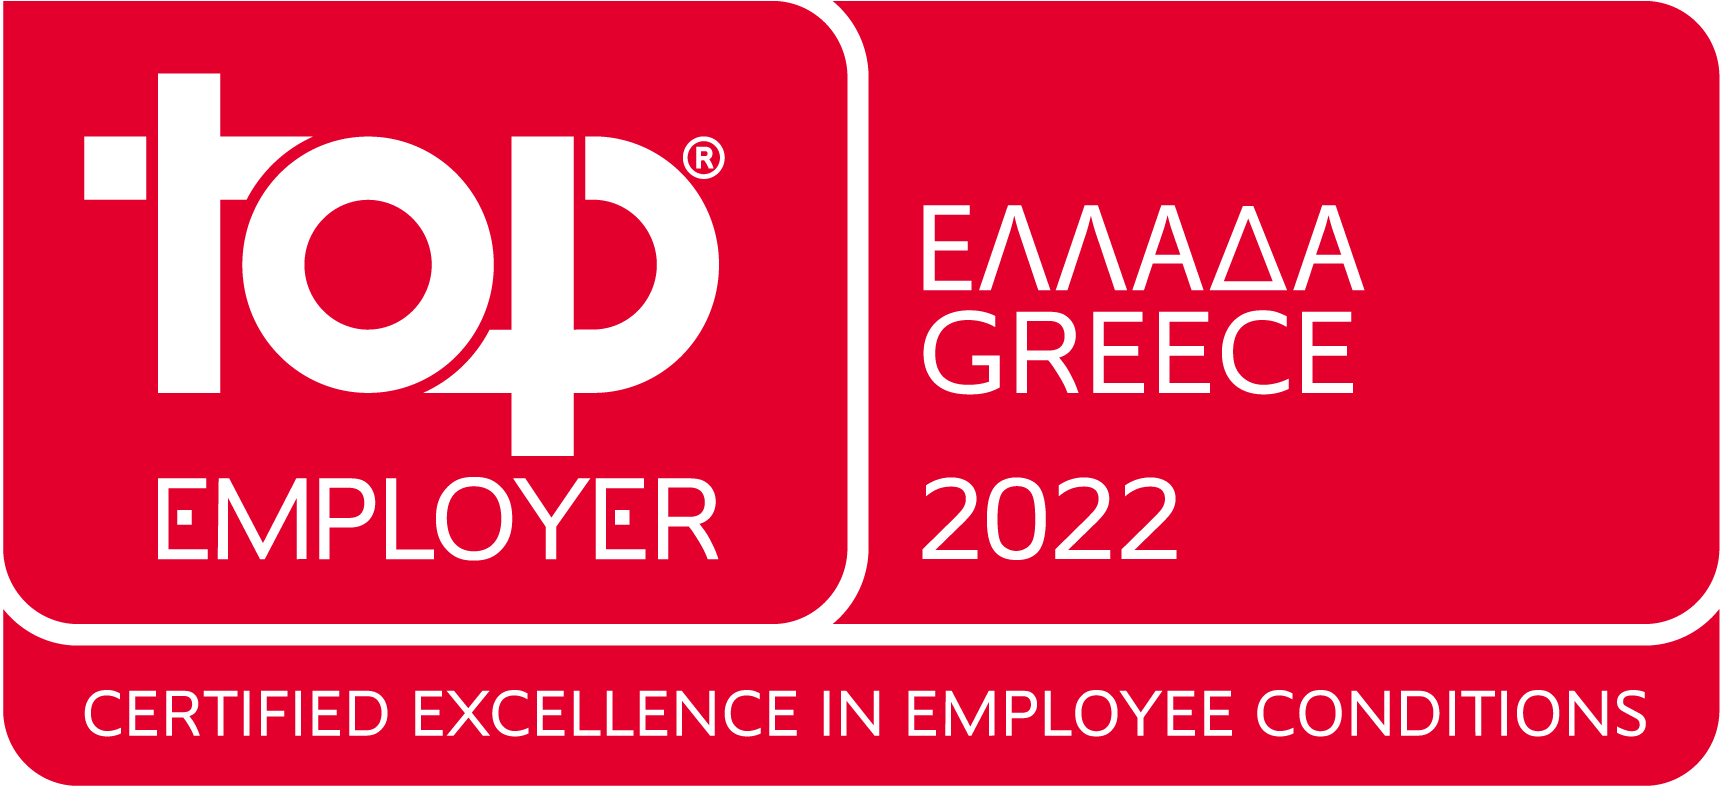 Top Employer Award 2022